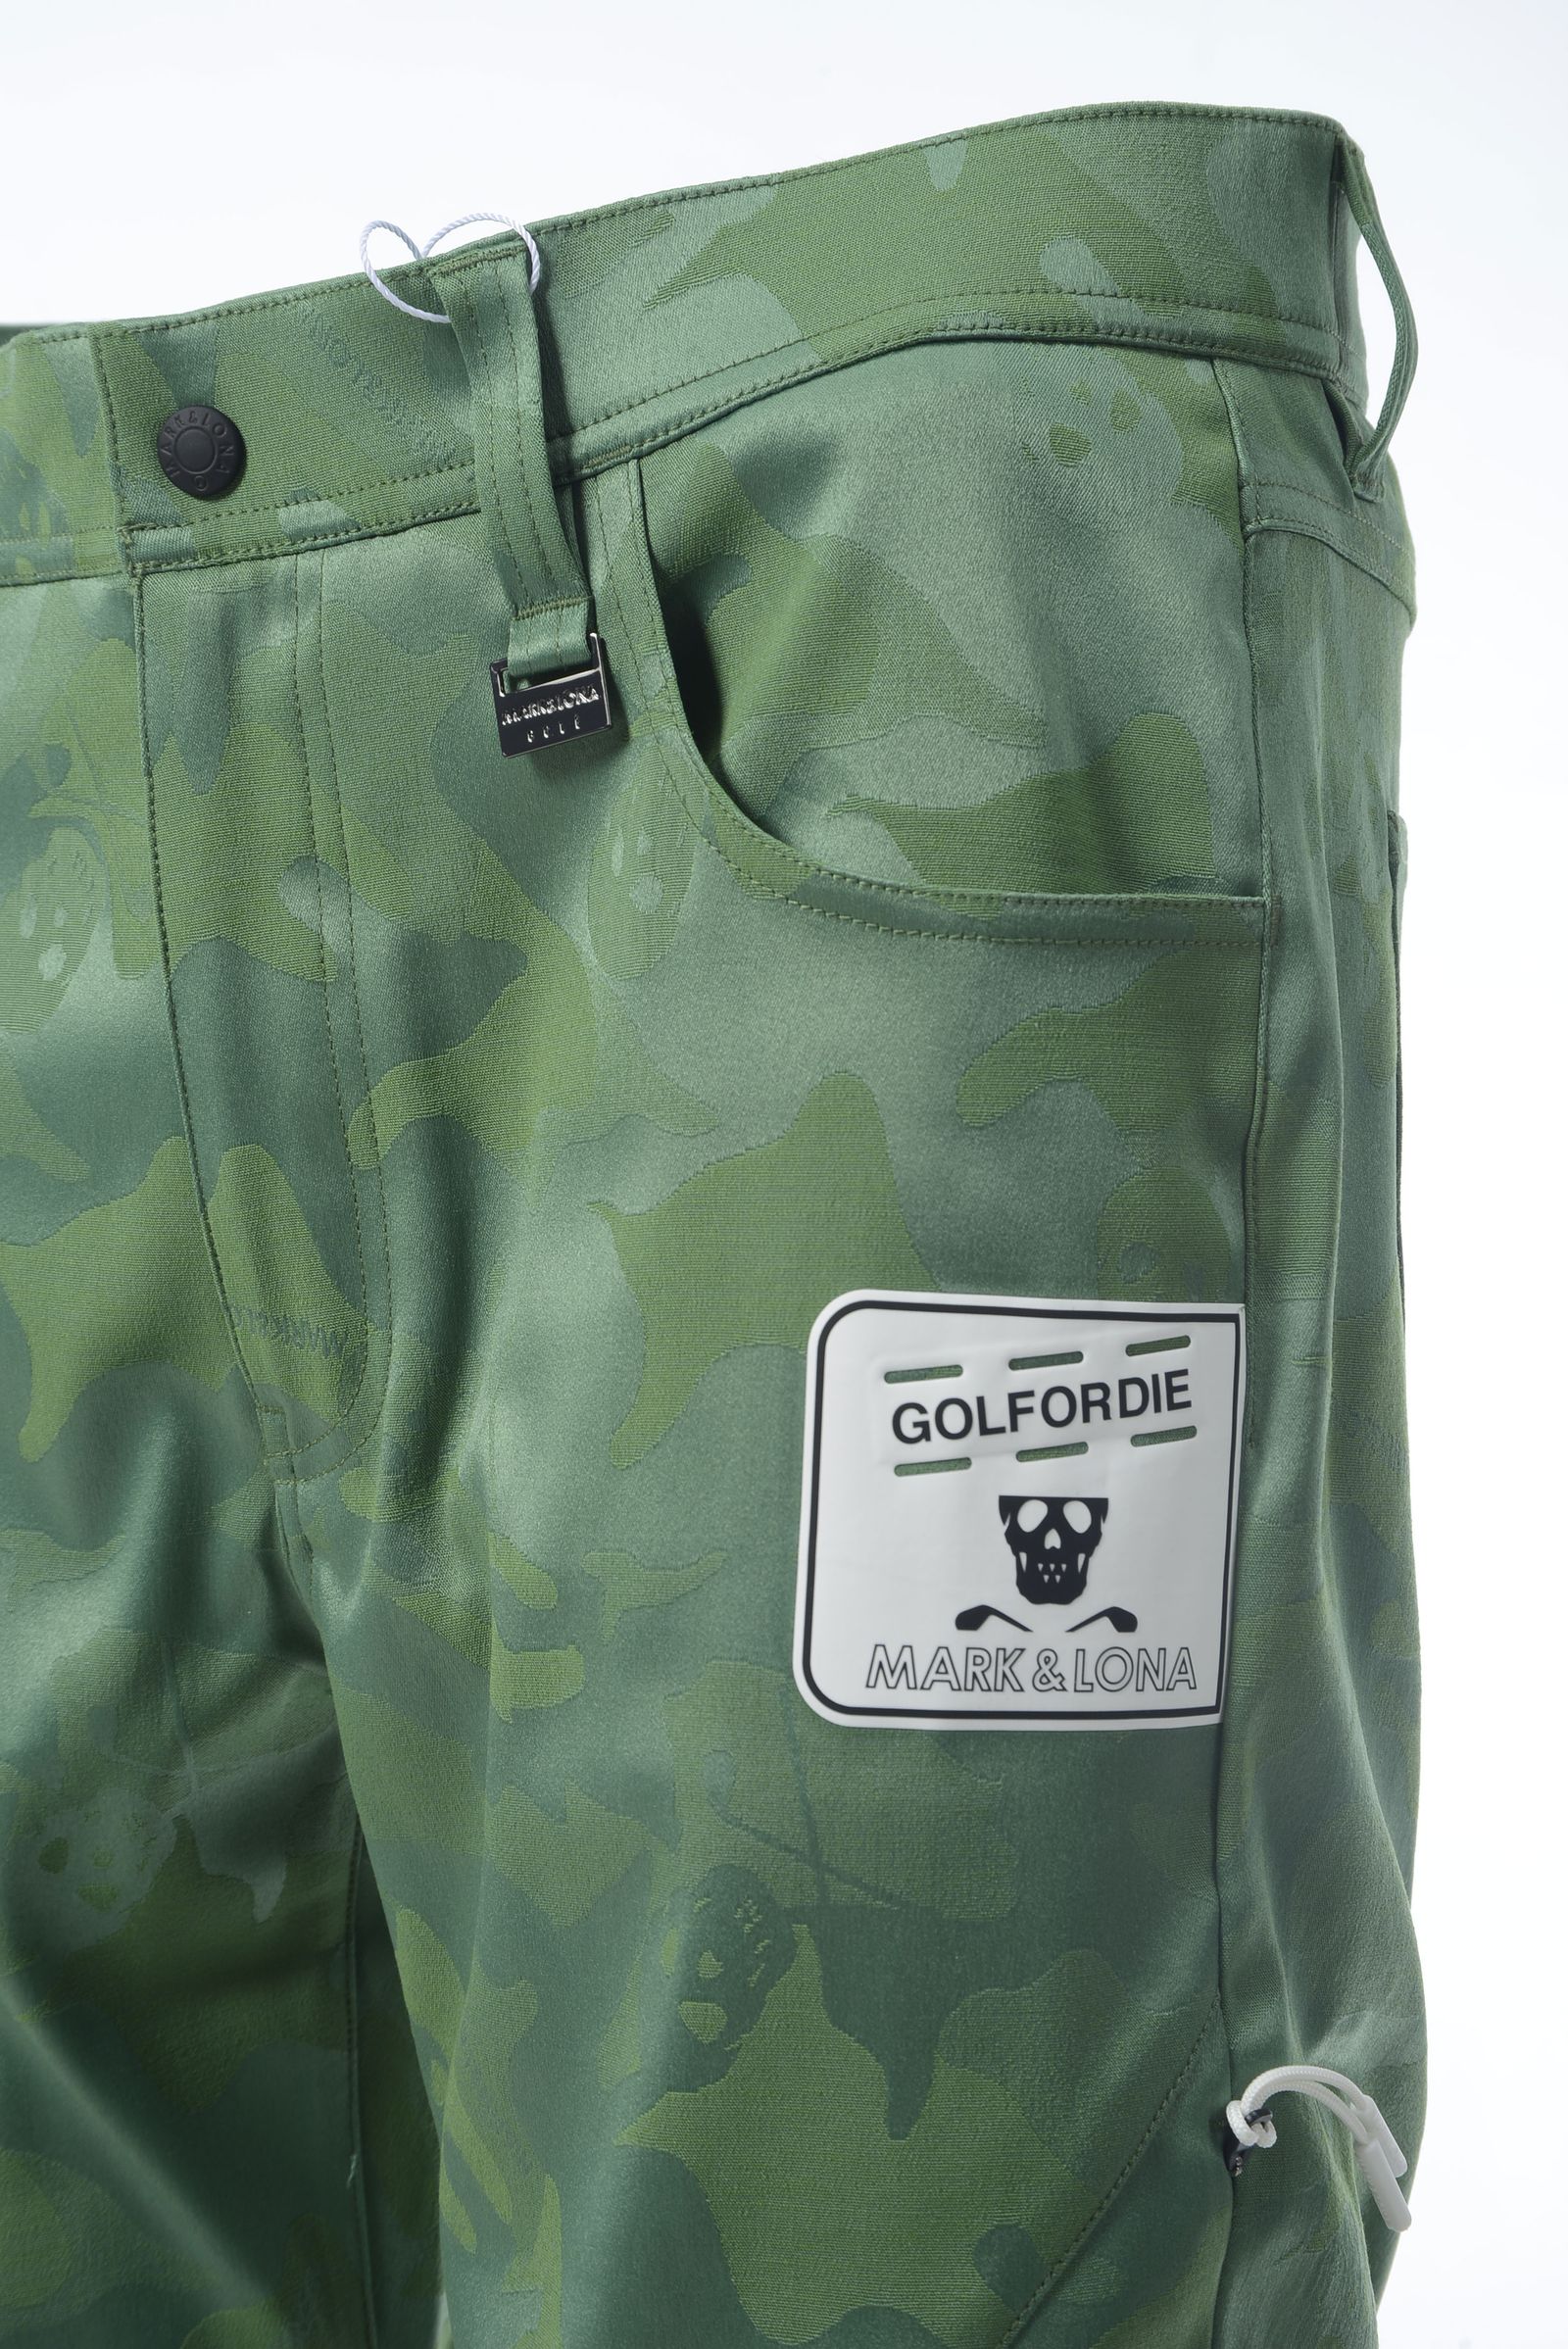 Gauge Neo 7PK Pants | パンツ | グリーン | メンズ | ゴルフウェア - 44 (S)